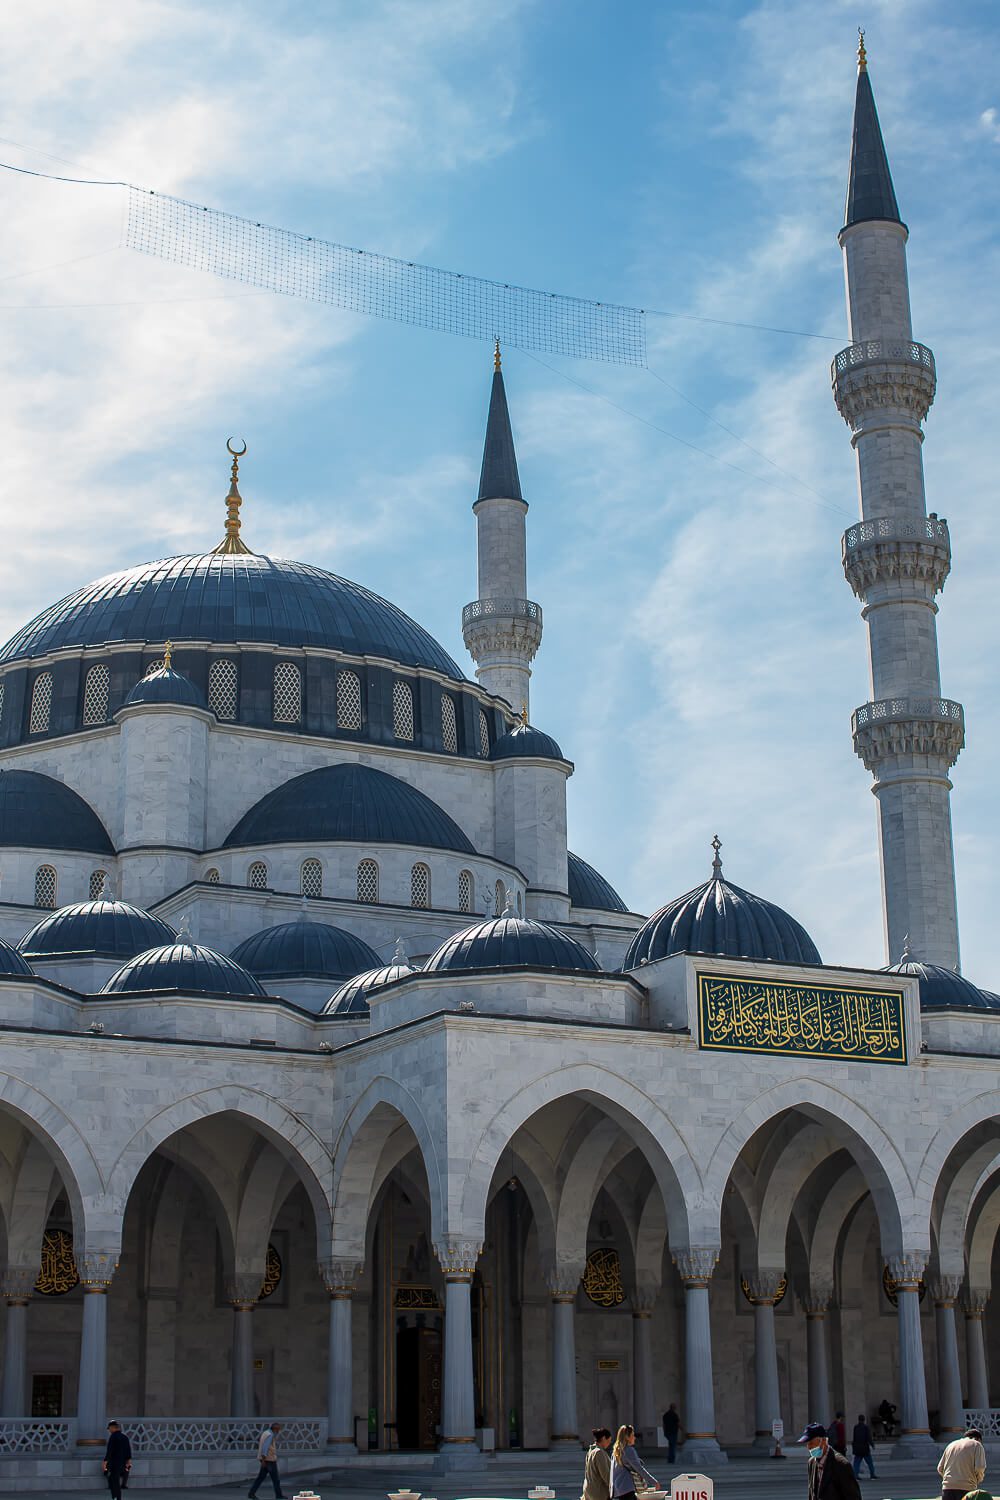 A mosque in Turkey